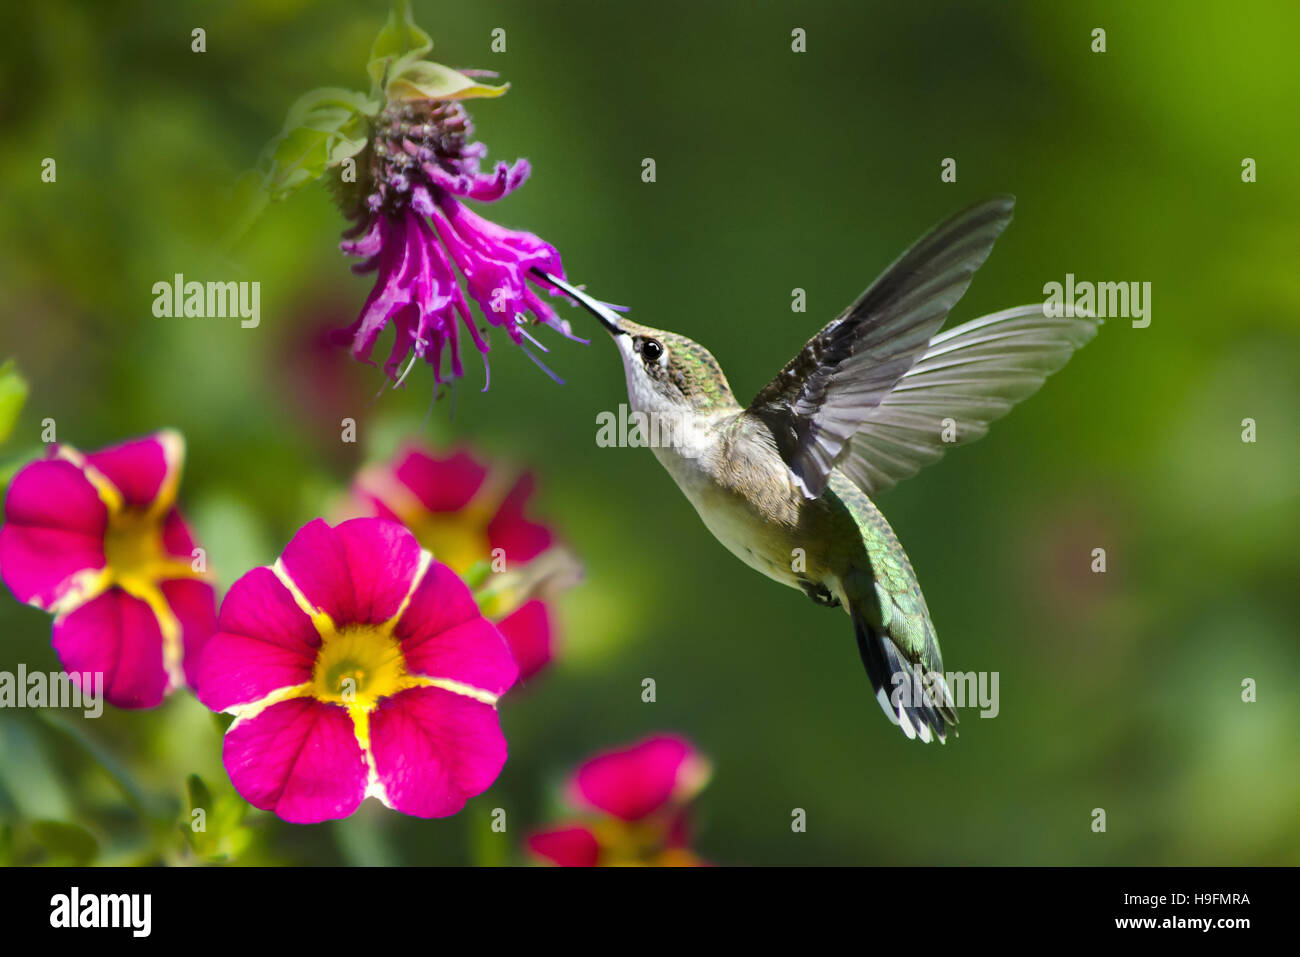 Hummingbird in flight feeding on flower in summer garden. Stock Photo